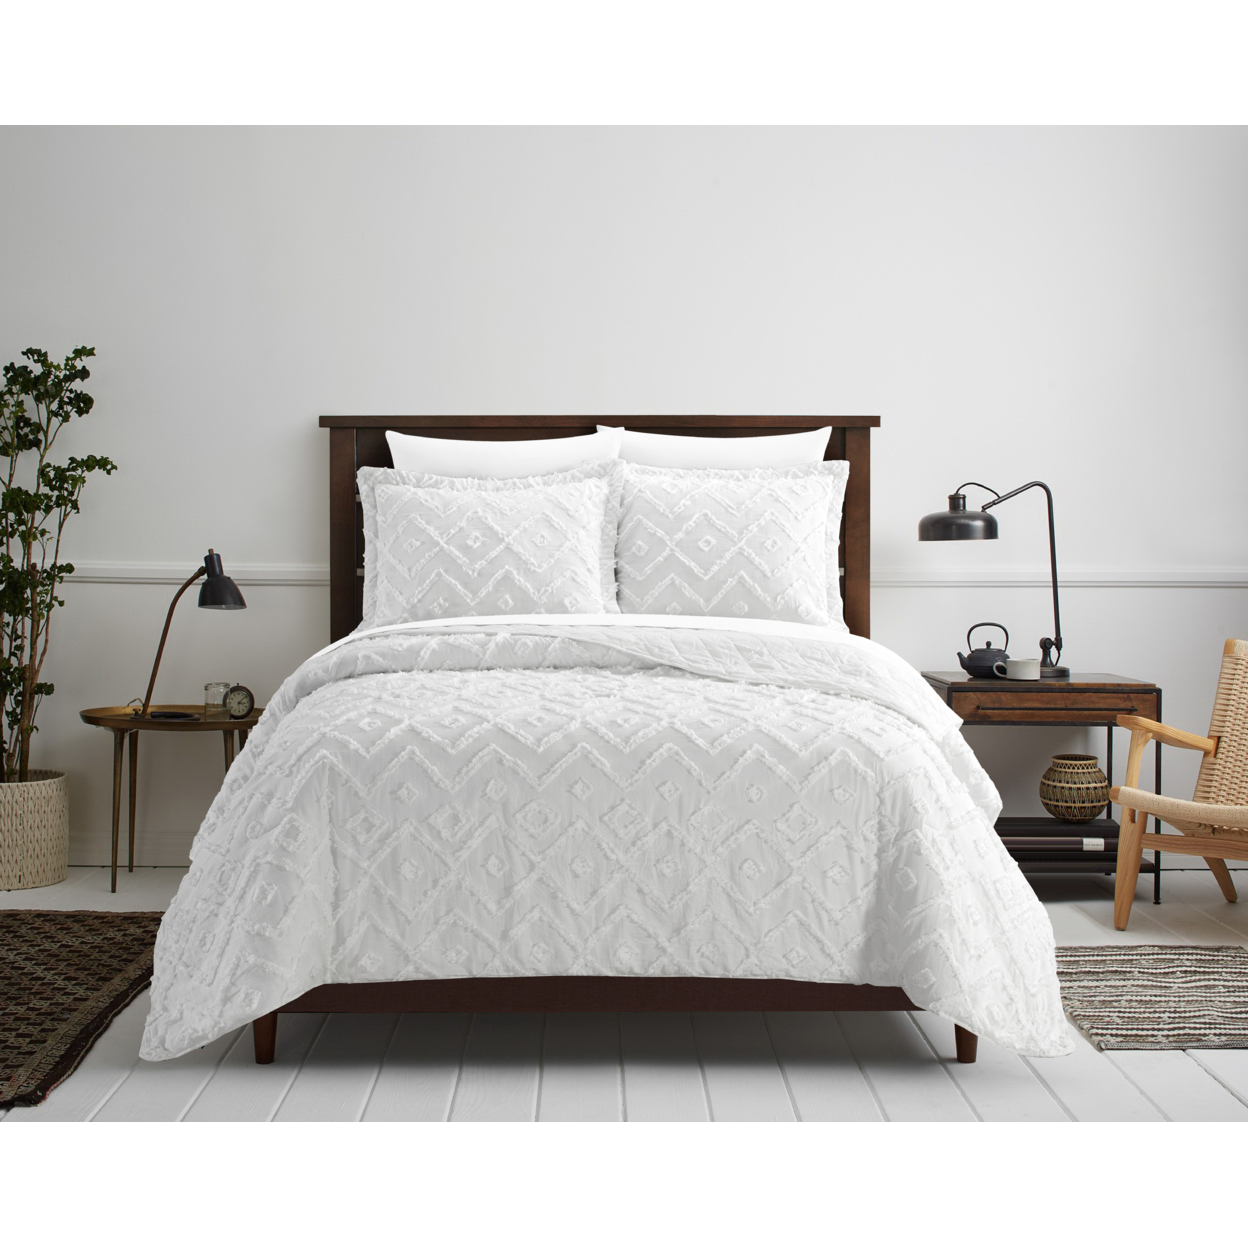 NY&C Home Dody 3 Piece Cotton Quilt Set Clip Jacquard Geometric Pattern Bedding - White, King